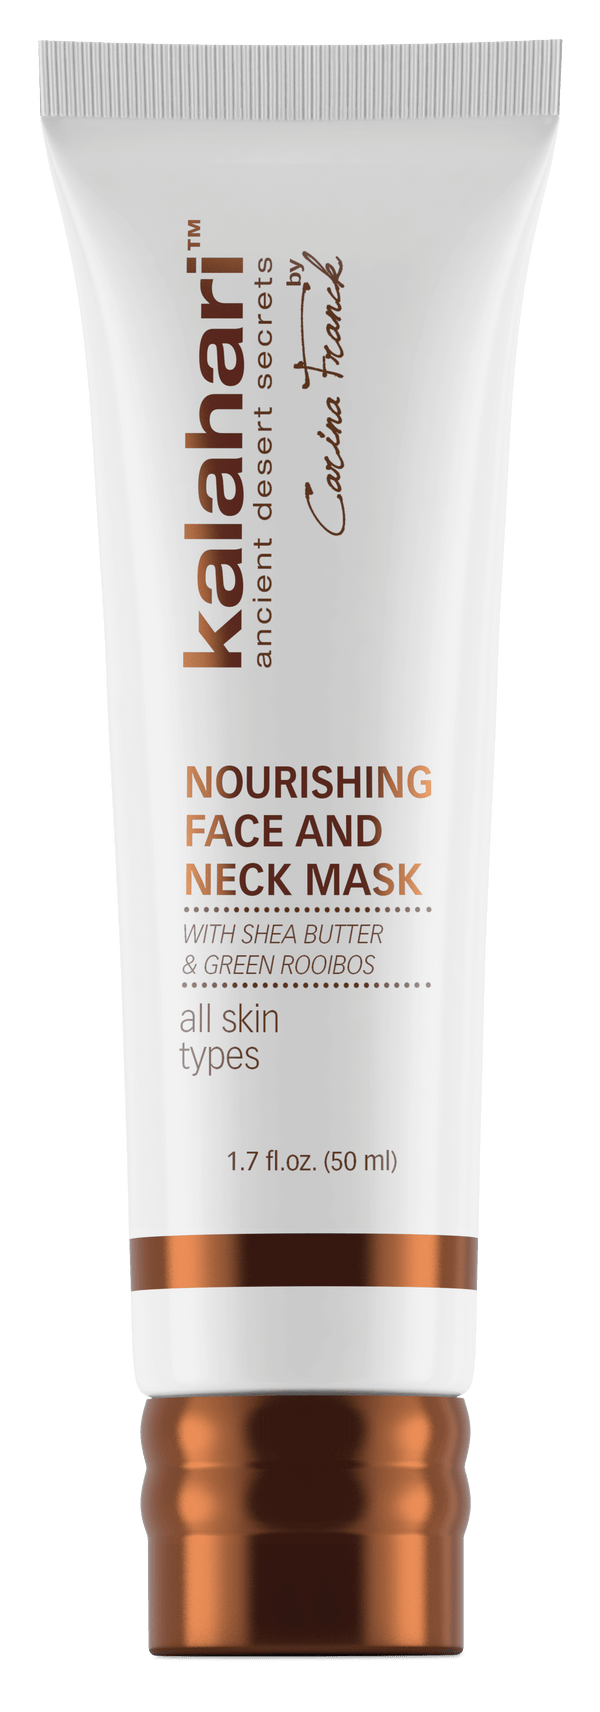 Nourishing face and neck mask